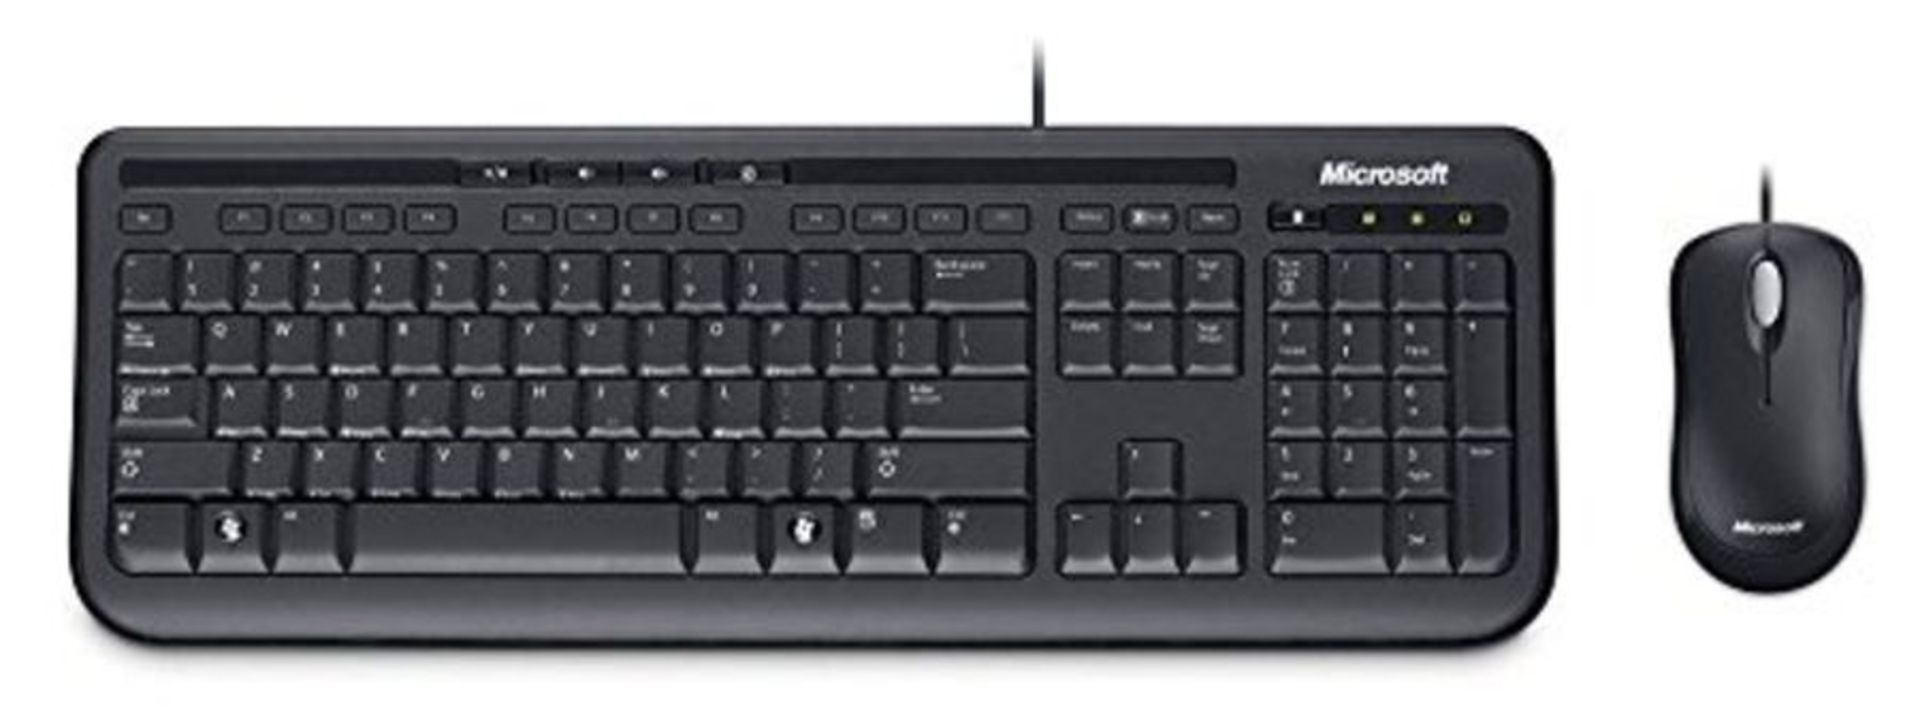 Microsoft Wired Desktop 600 for Business Keyboard - Black